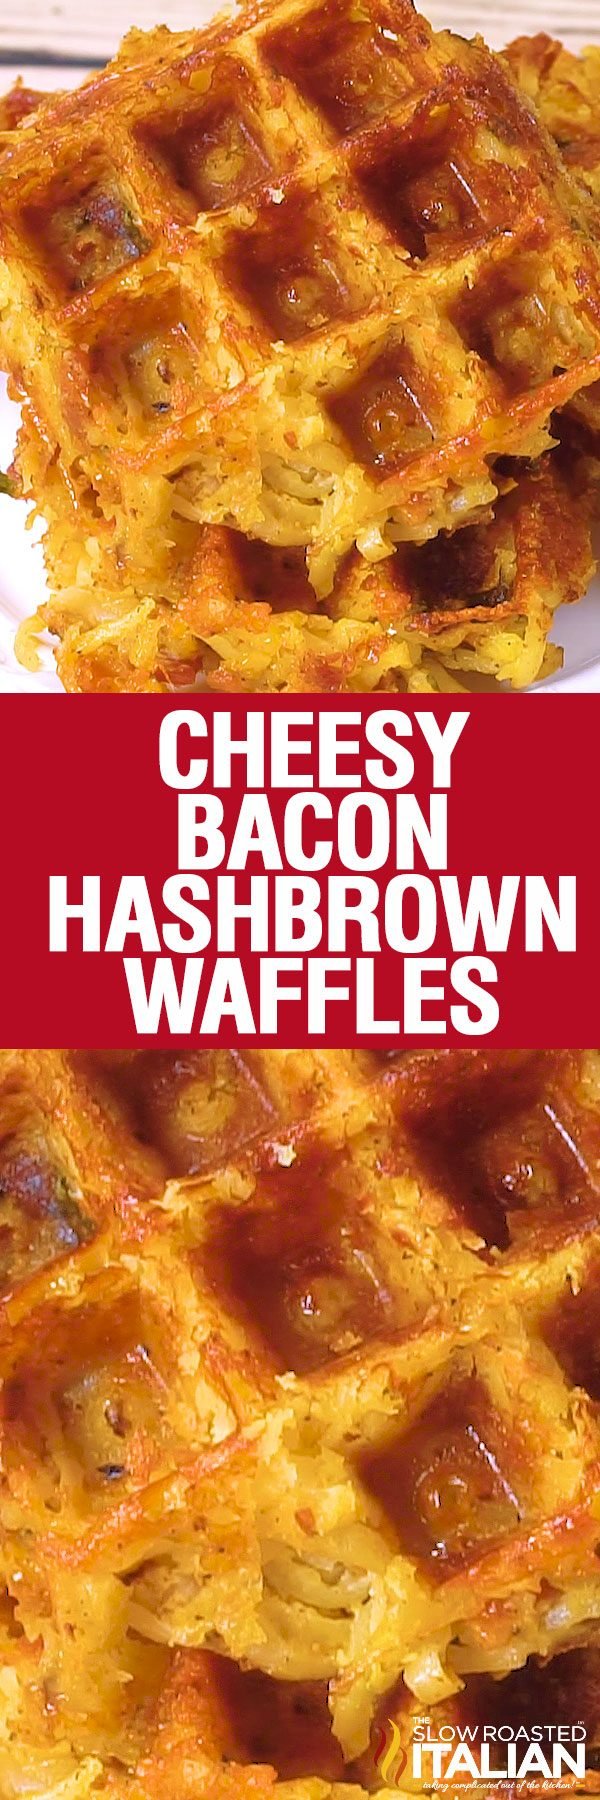 cheesy-bacon-hashbrown-waffles-pin-7740054